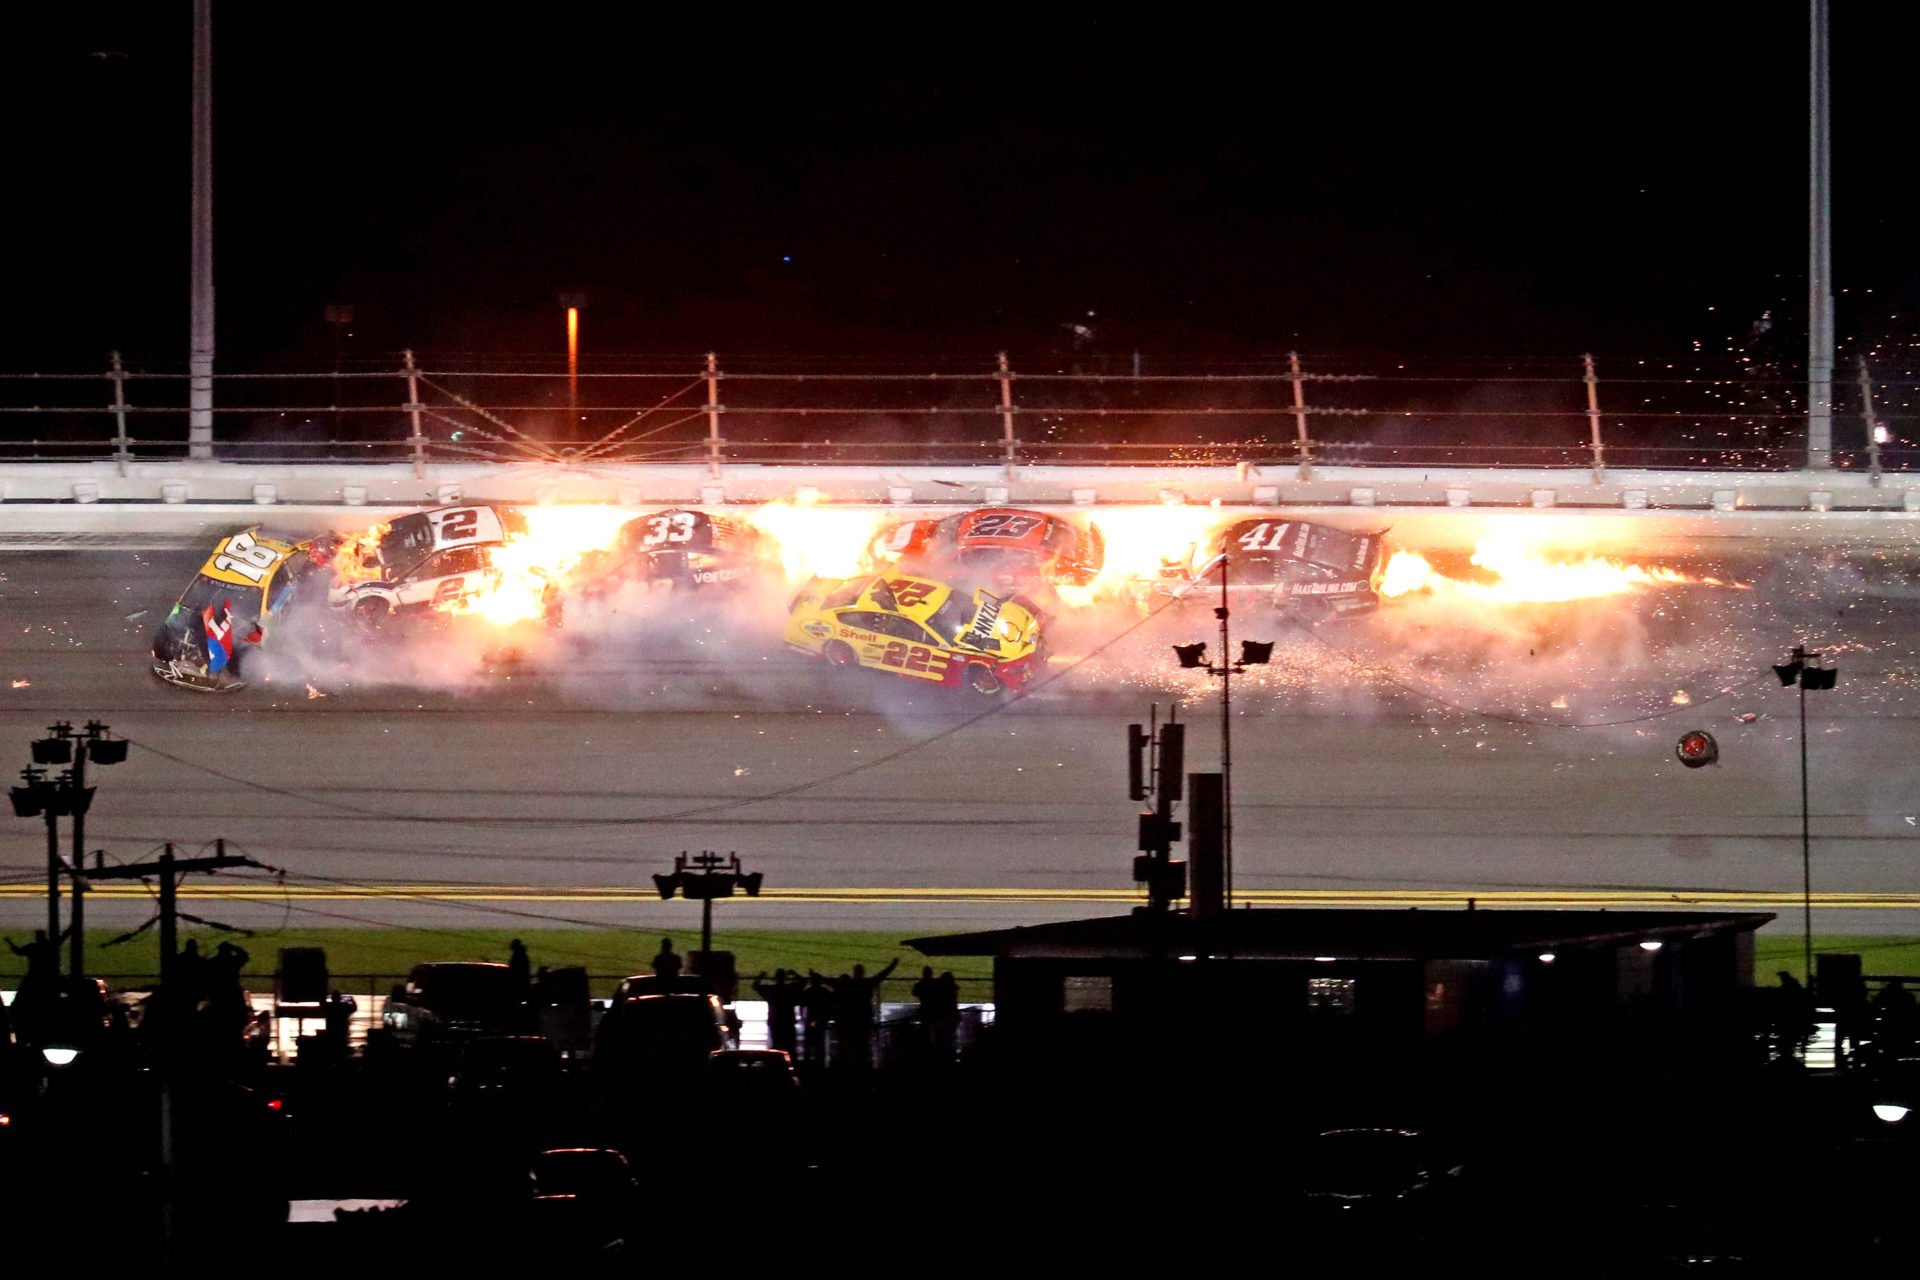 Michael McDowell wins Daytona 500 as several cars crash and burst into flames